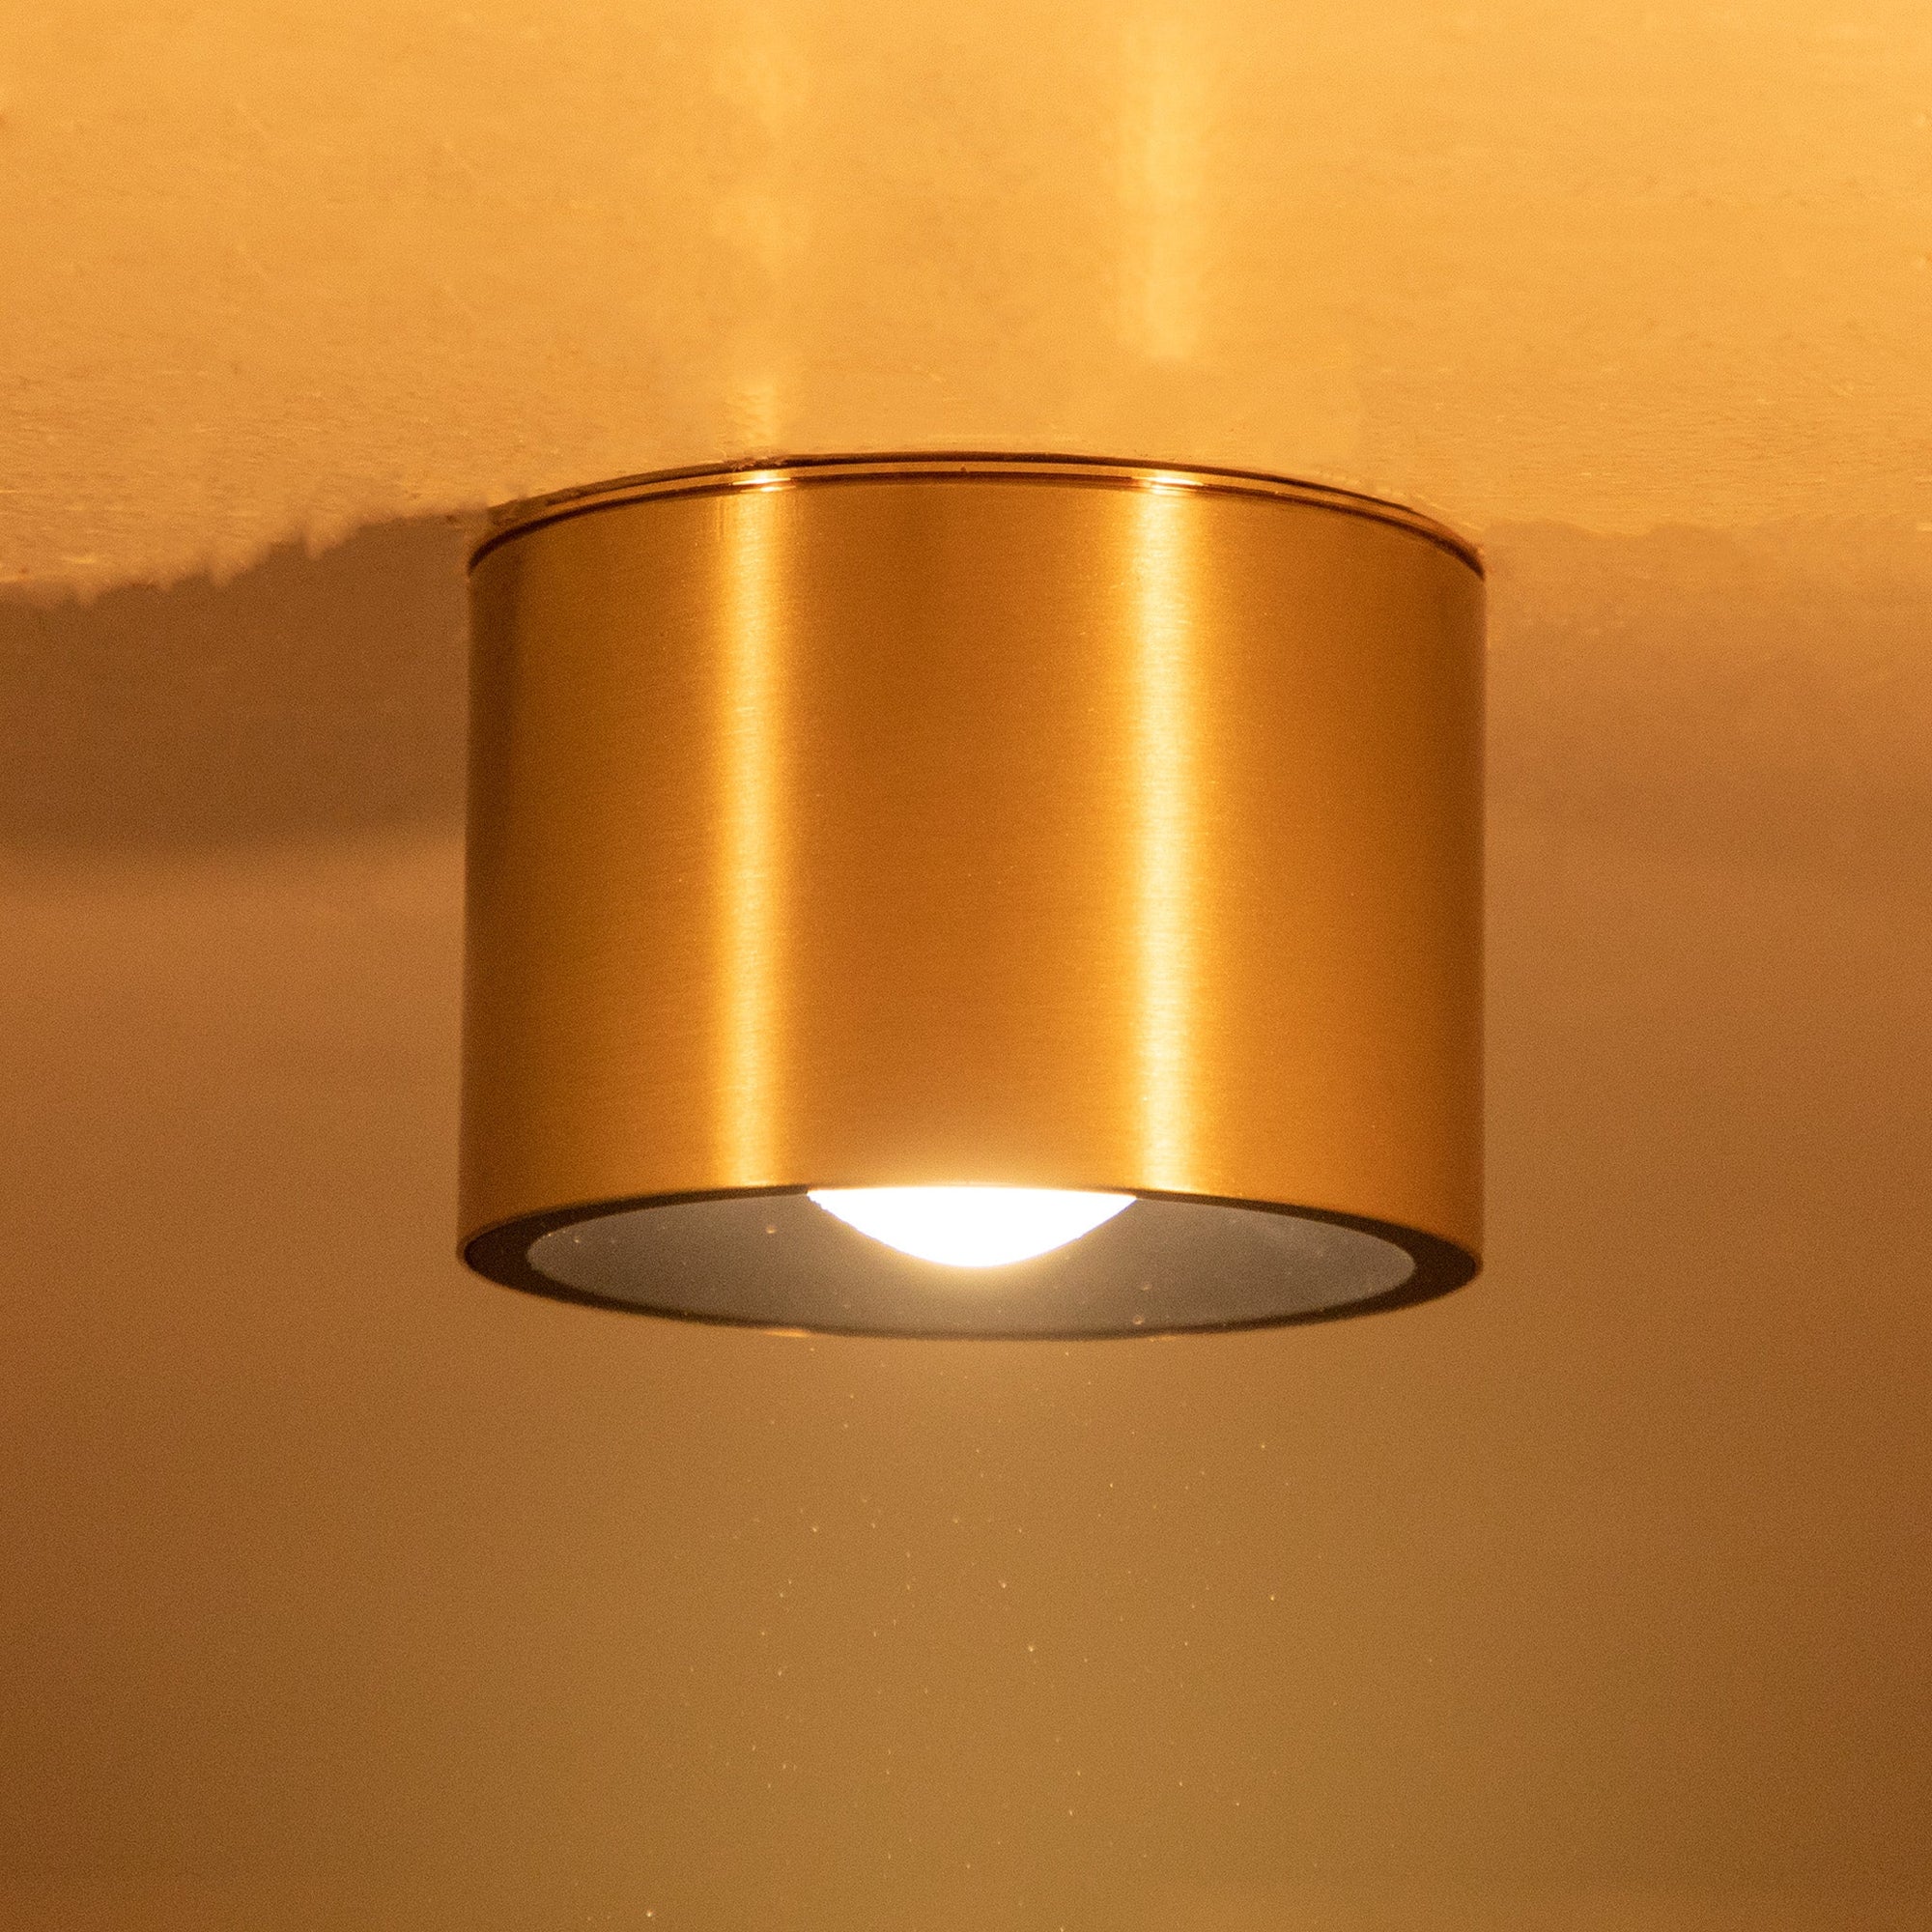 Alpen Brass LED Surface Light online